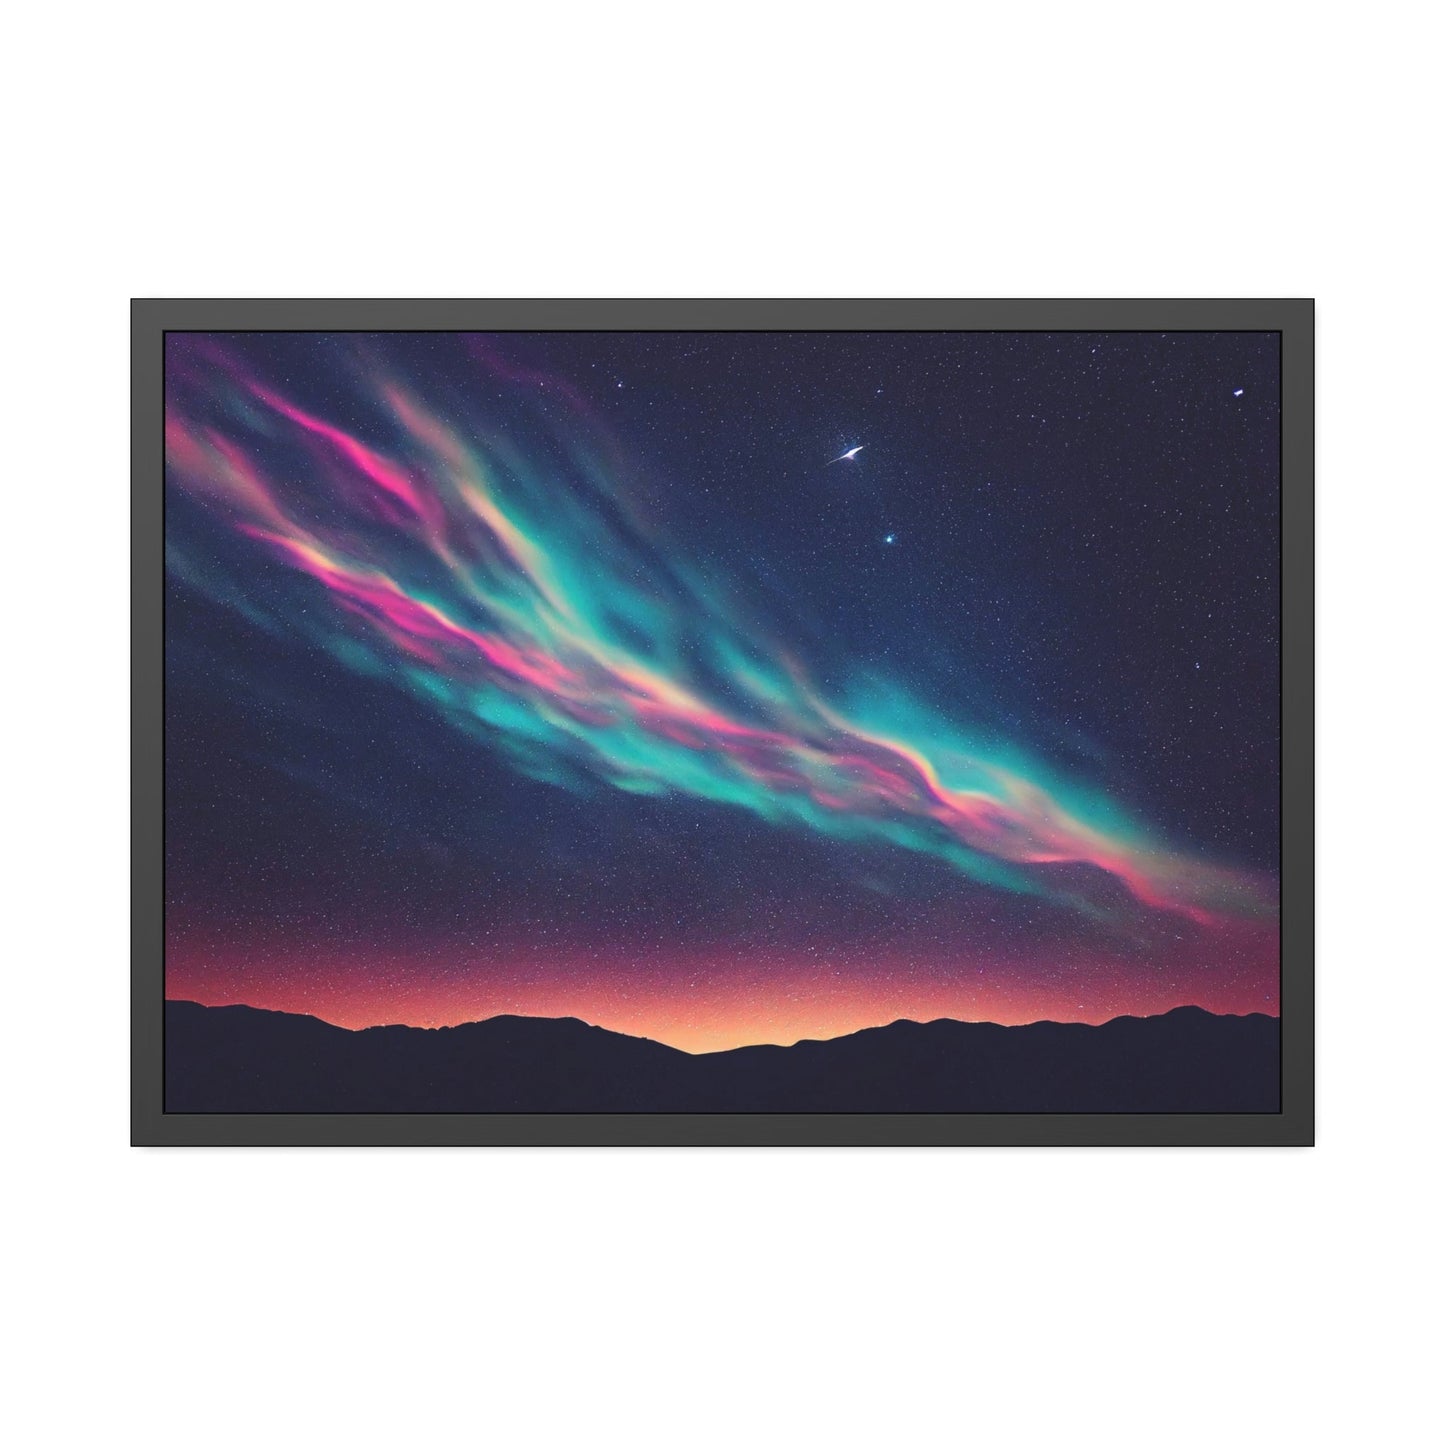 Celestial Dance of the Aurora Borealis: A Symphony on Canvas